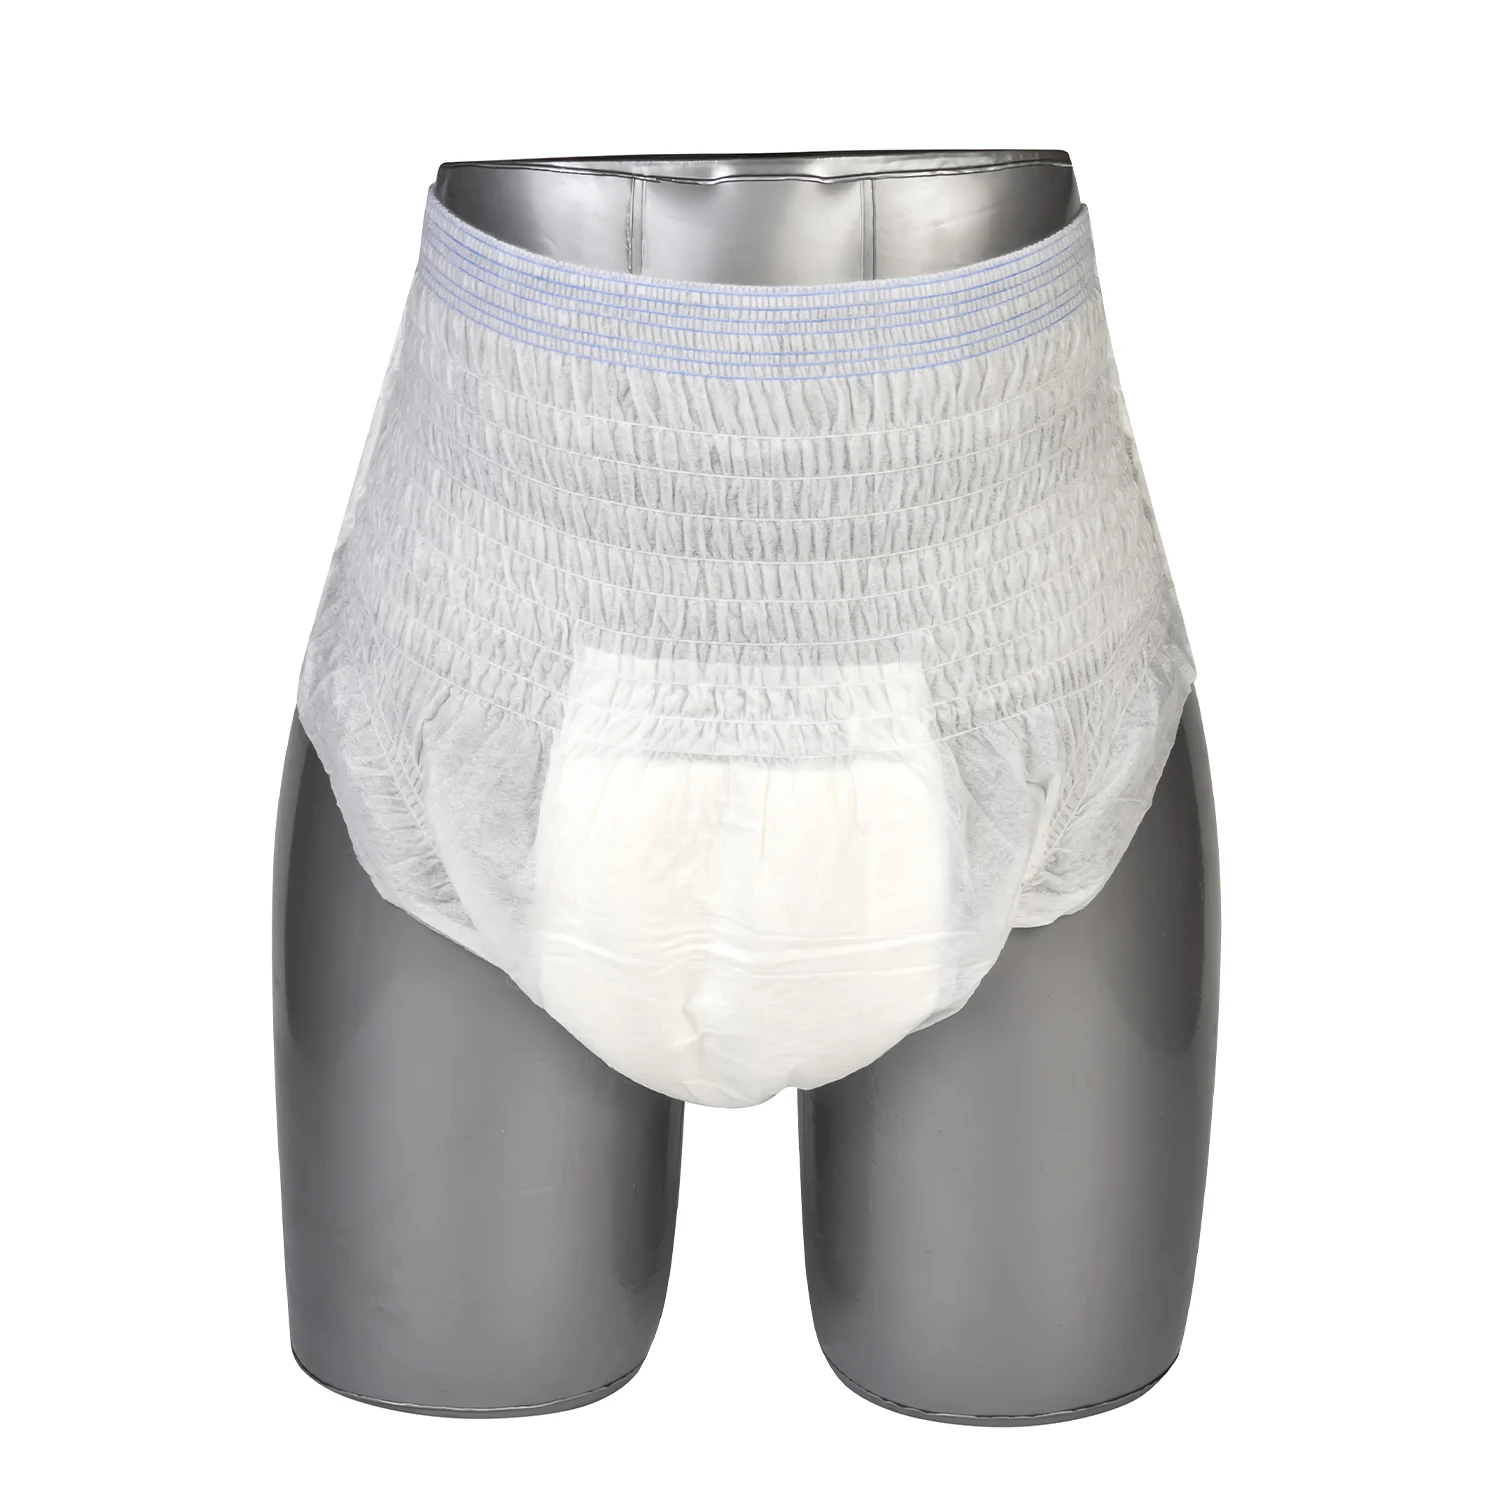 China disposable underwear bulk manufacturer, adult disposable underwear  vendor, China disposable medical panties wholesaler